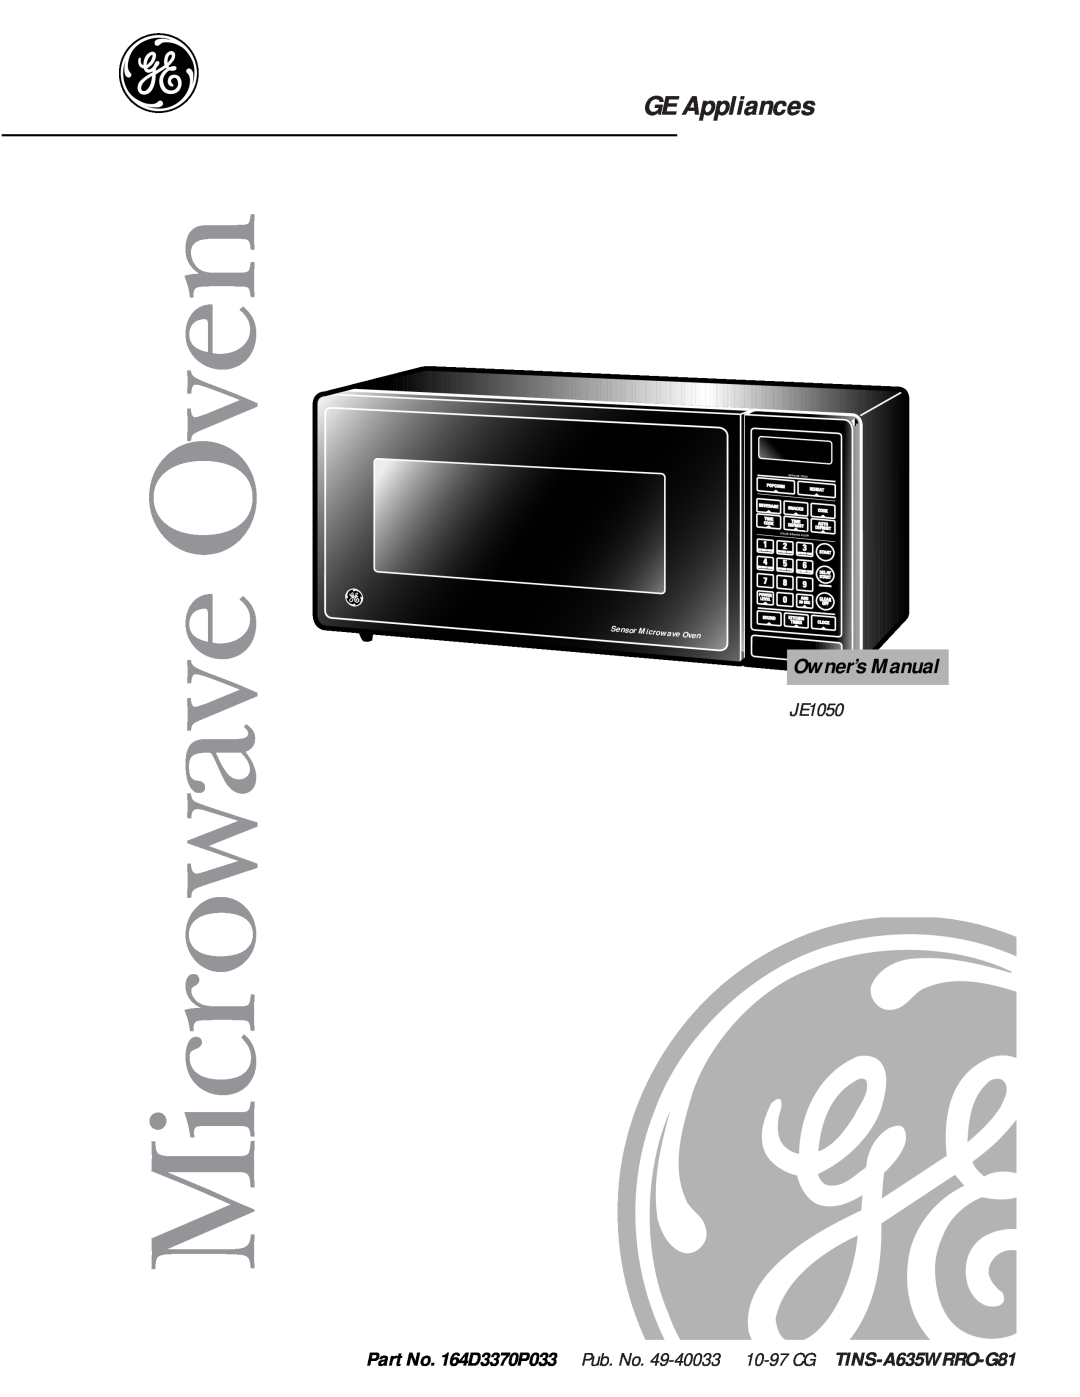 GE JE1050 owner manual Owner’s Manual, Microwave Oven, GE Appliances, Sensor Cook Guide Behind Door 